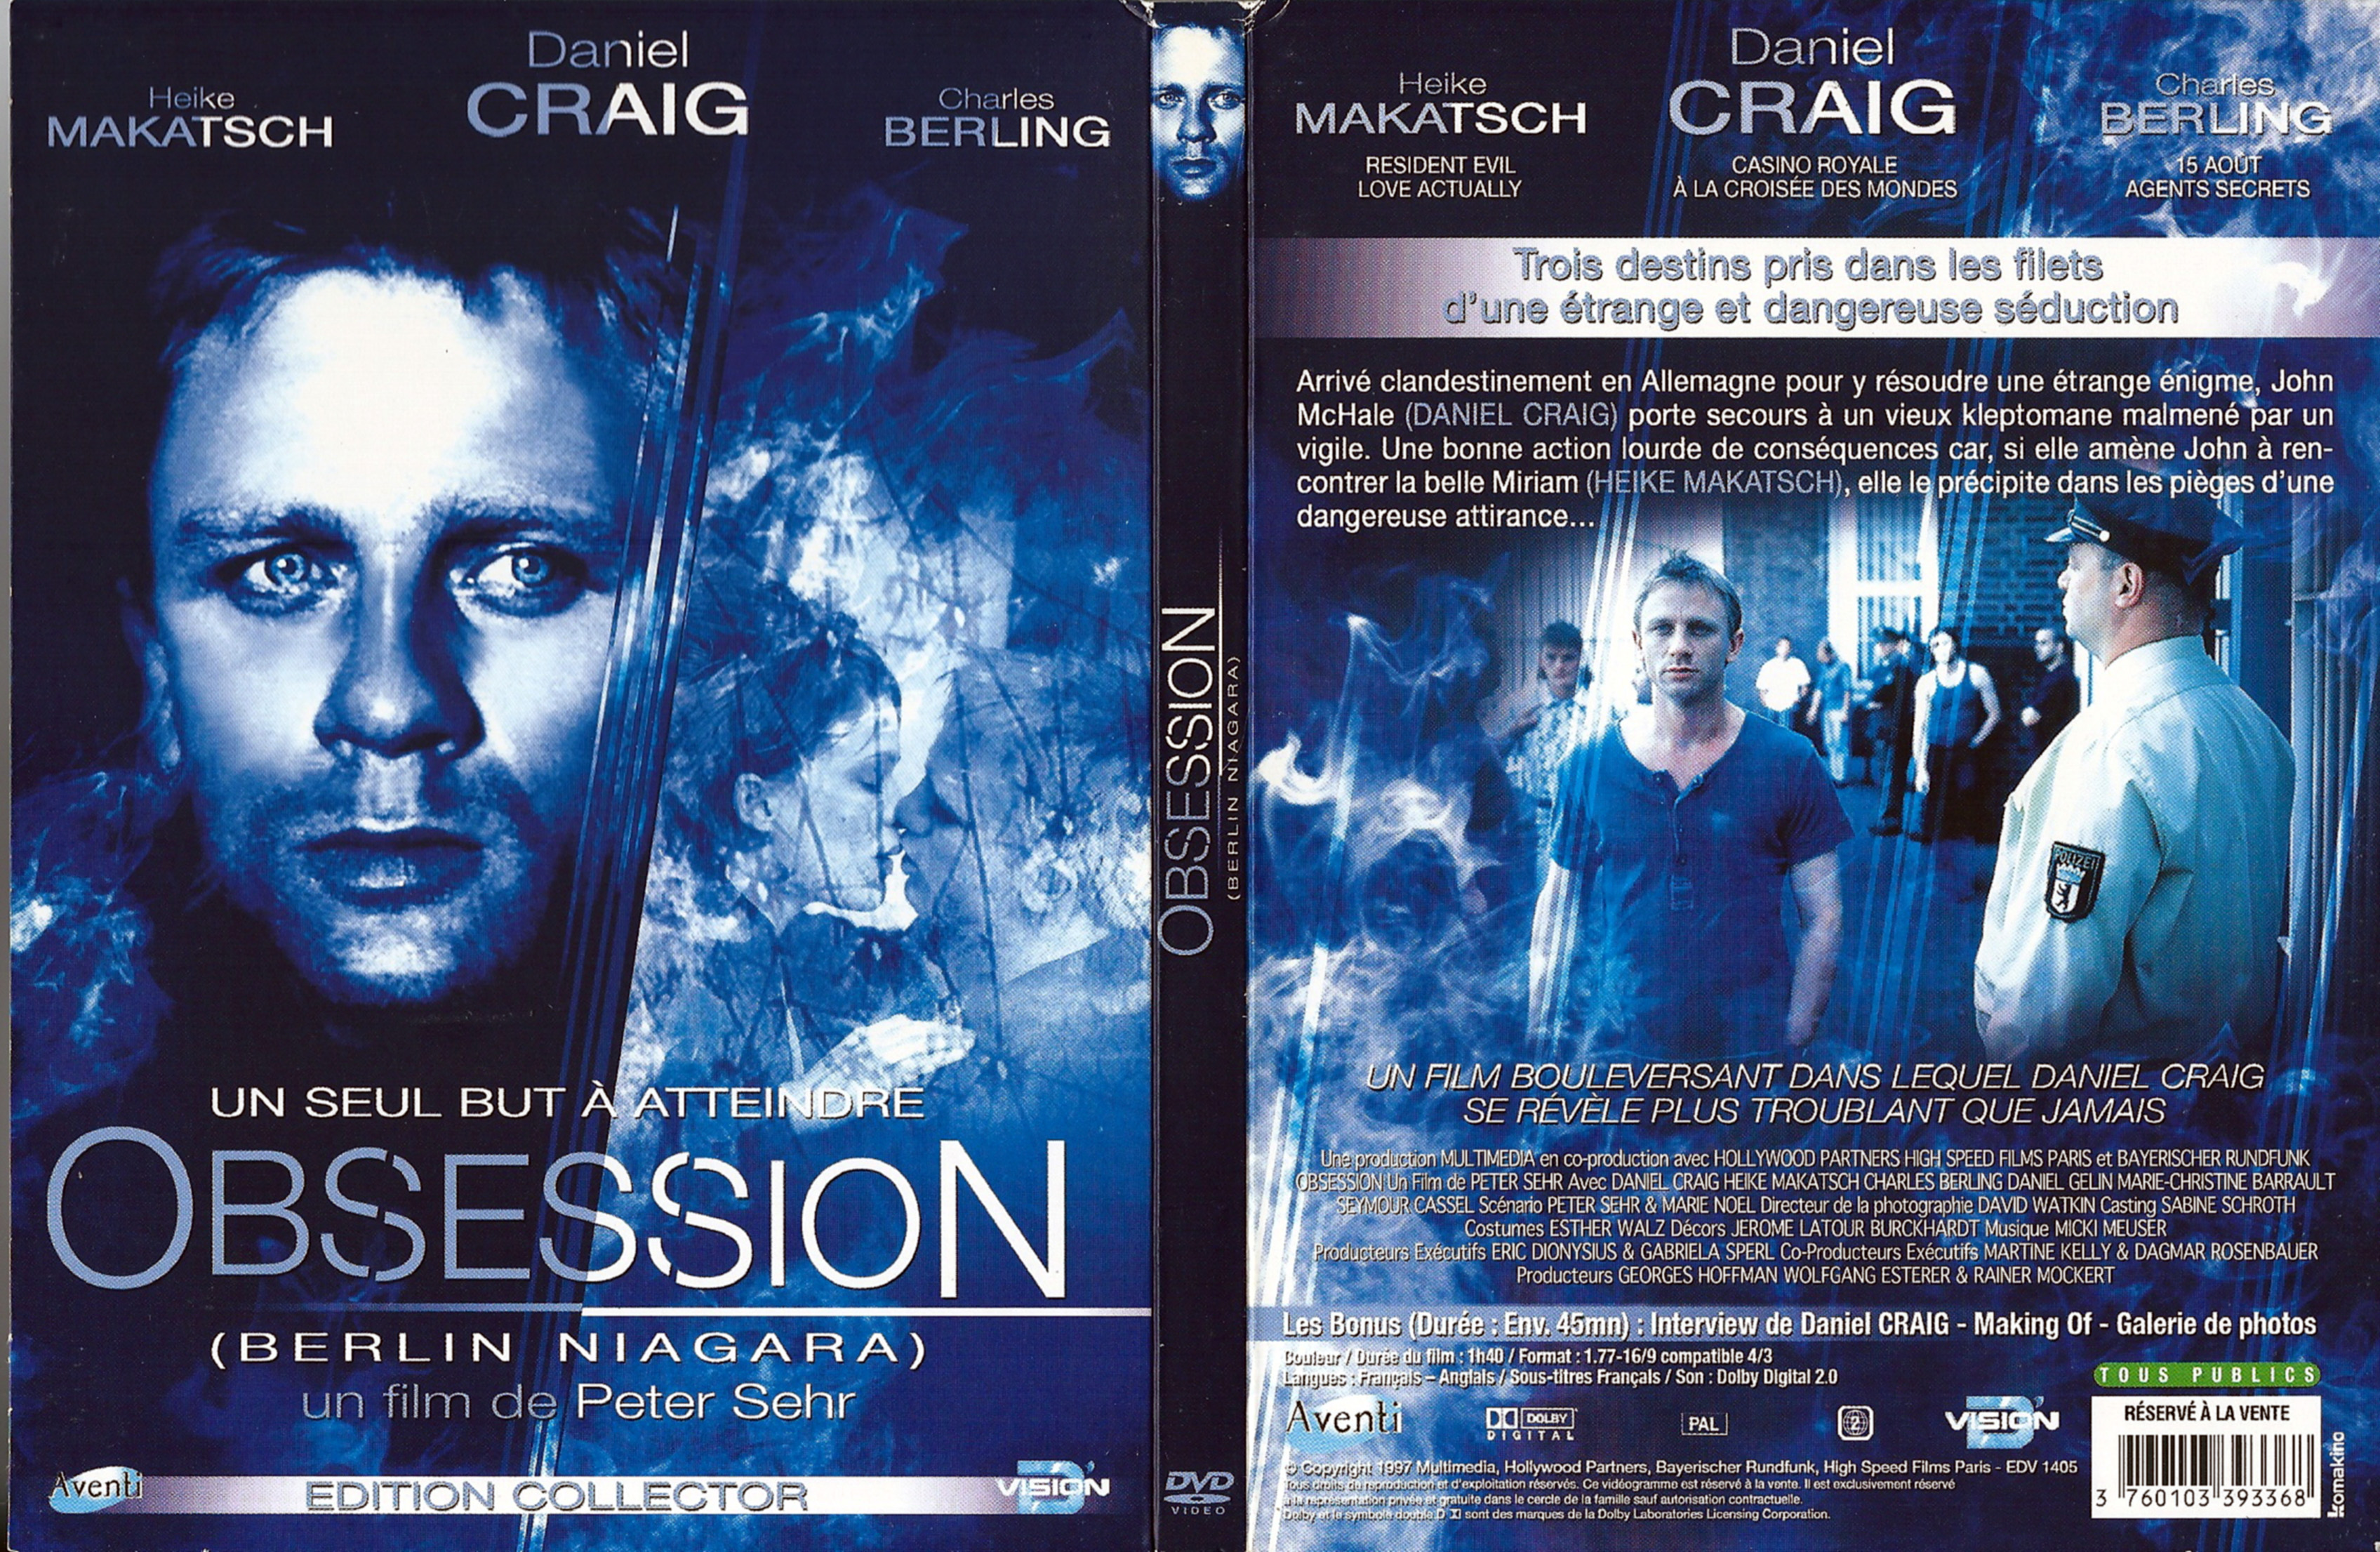 Jaquette DVD Obsession (Berlin Niagara)